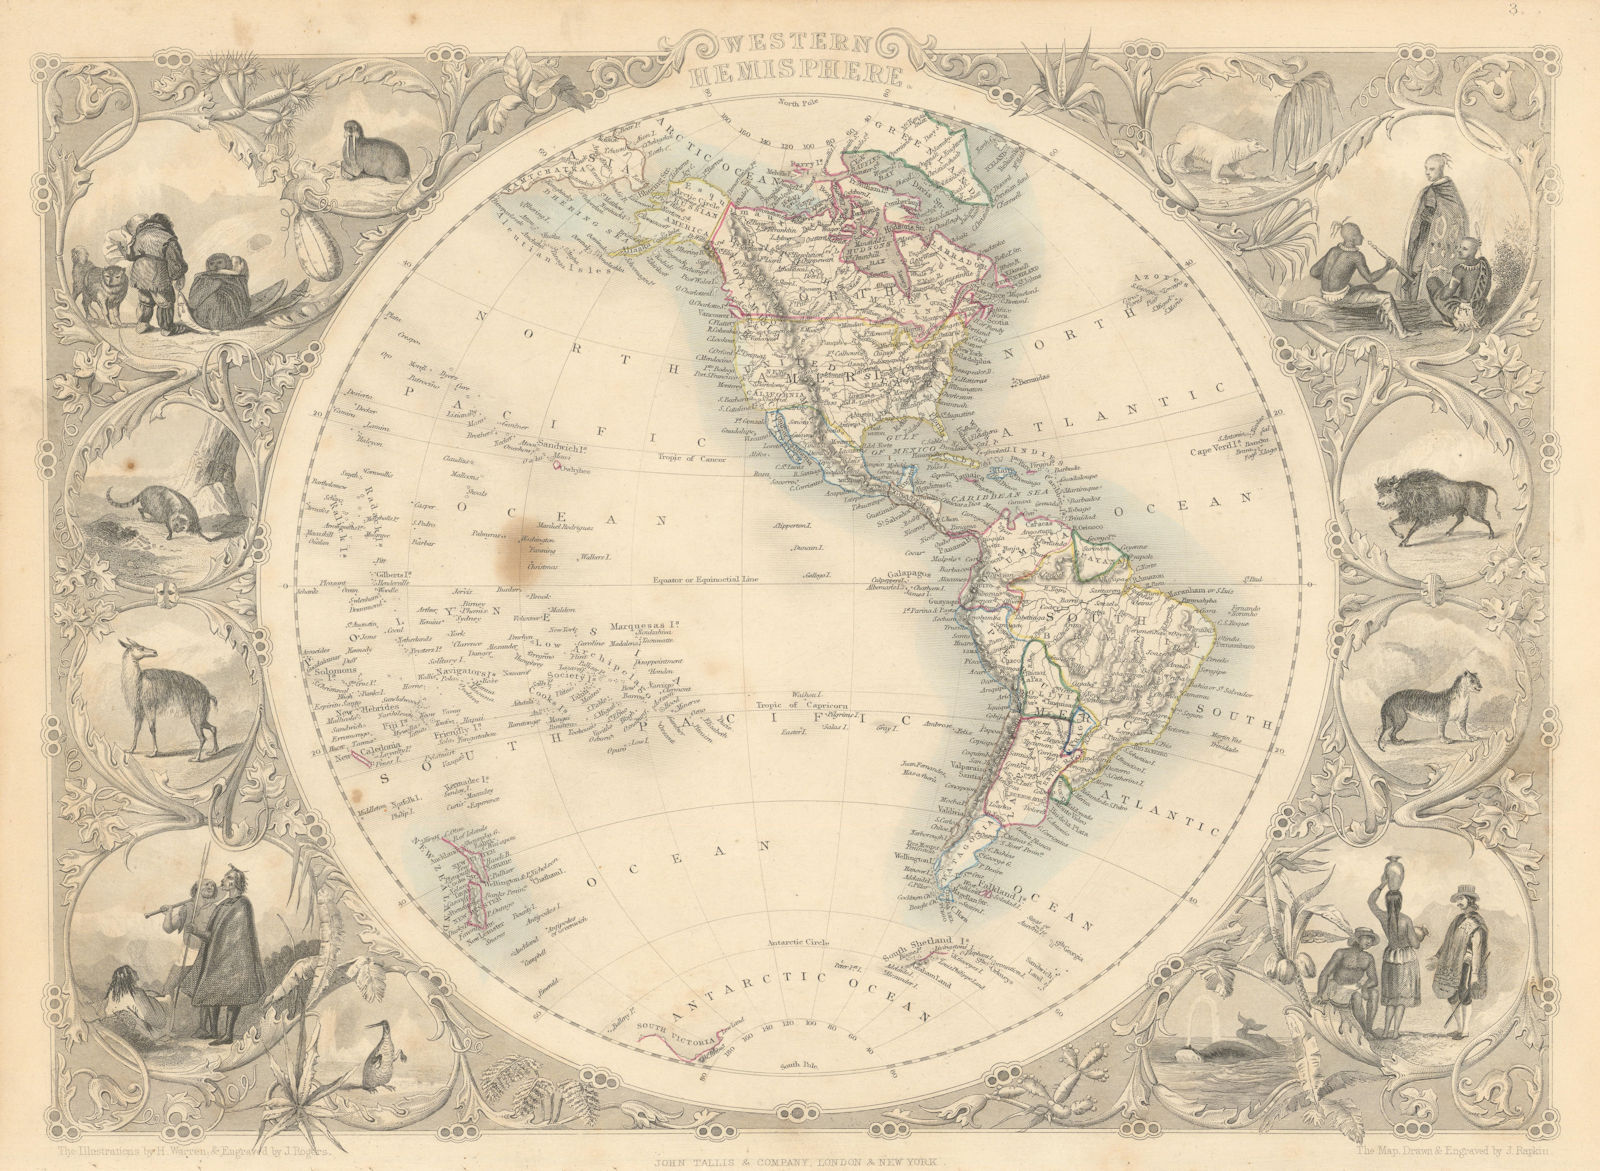 WESTERN HEMISPHERE. Shows Russian America, Gran Colombia. RAPKIN/TALLIS 1851 map